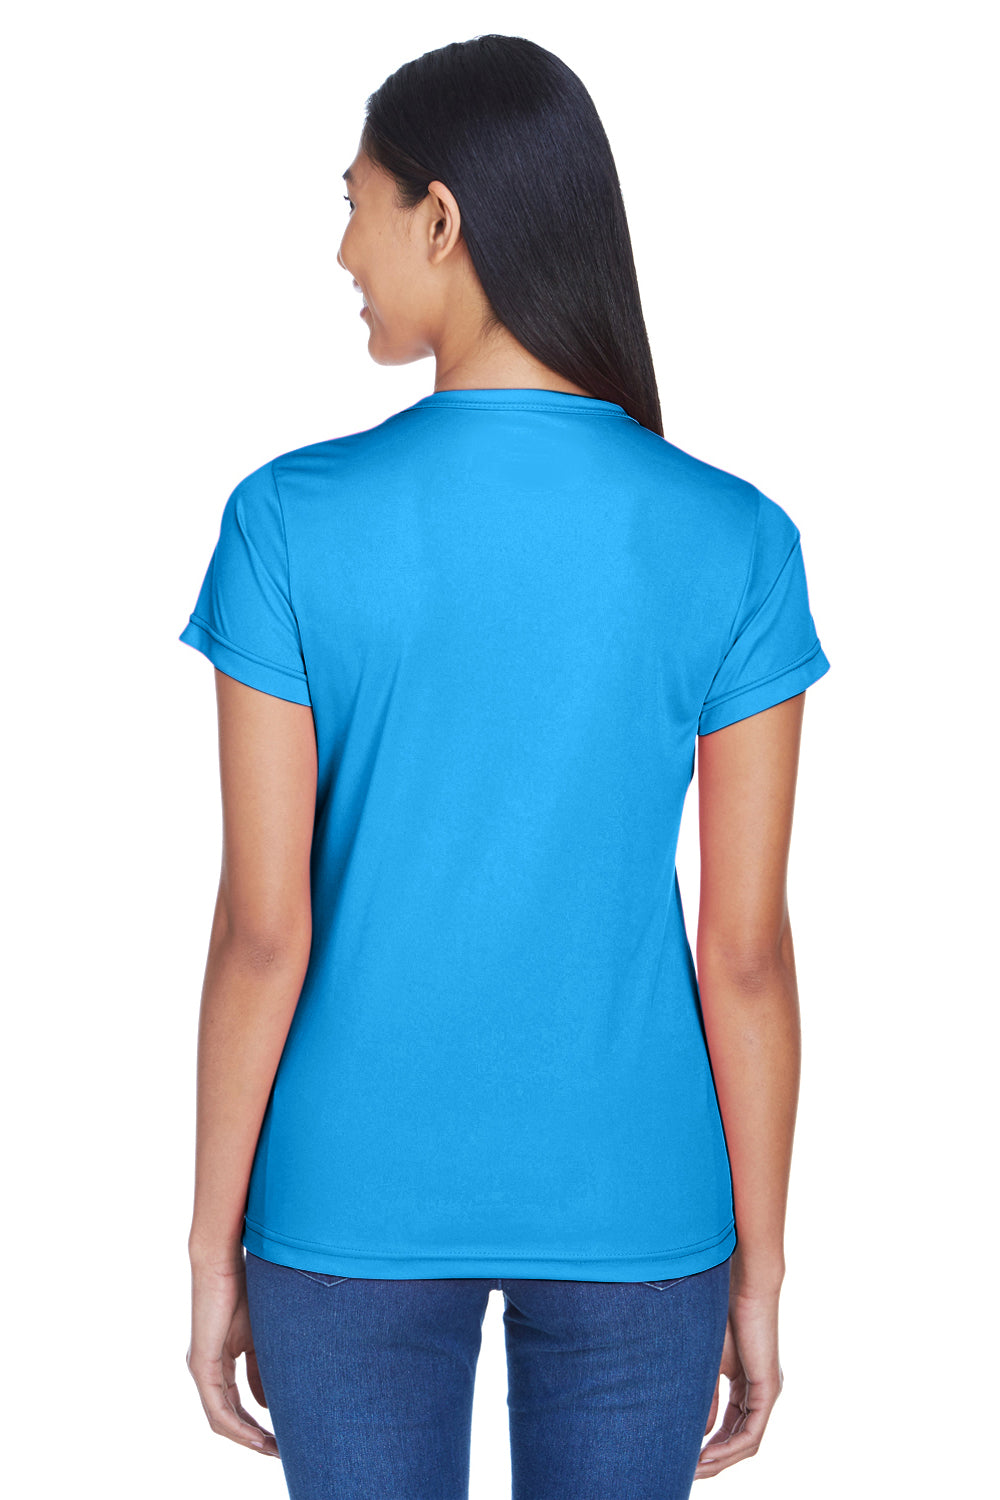 UltraClub 8420L Womens Cool & Dry Performance Moisture Wicking Short Sleeve Crewneck T-Shirt Sapphire Blue Back